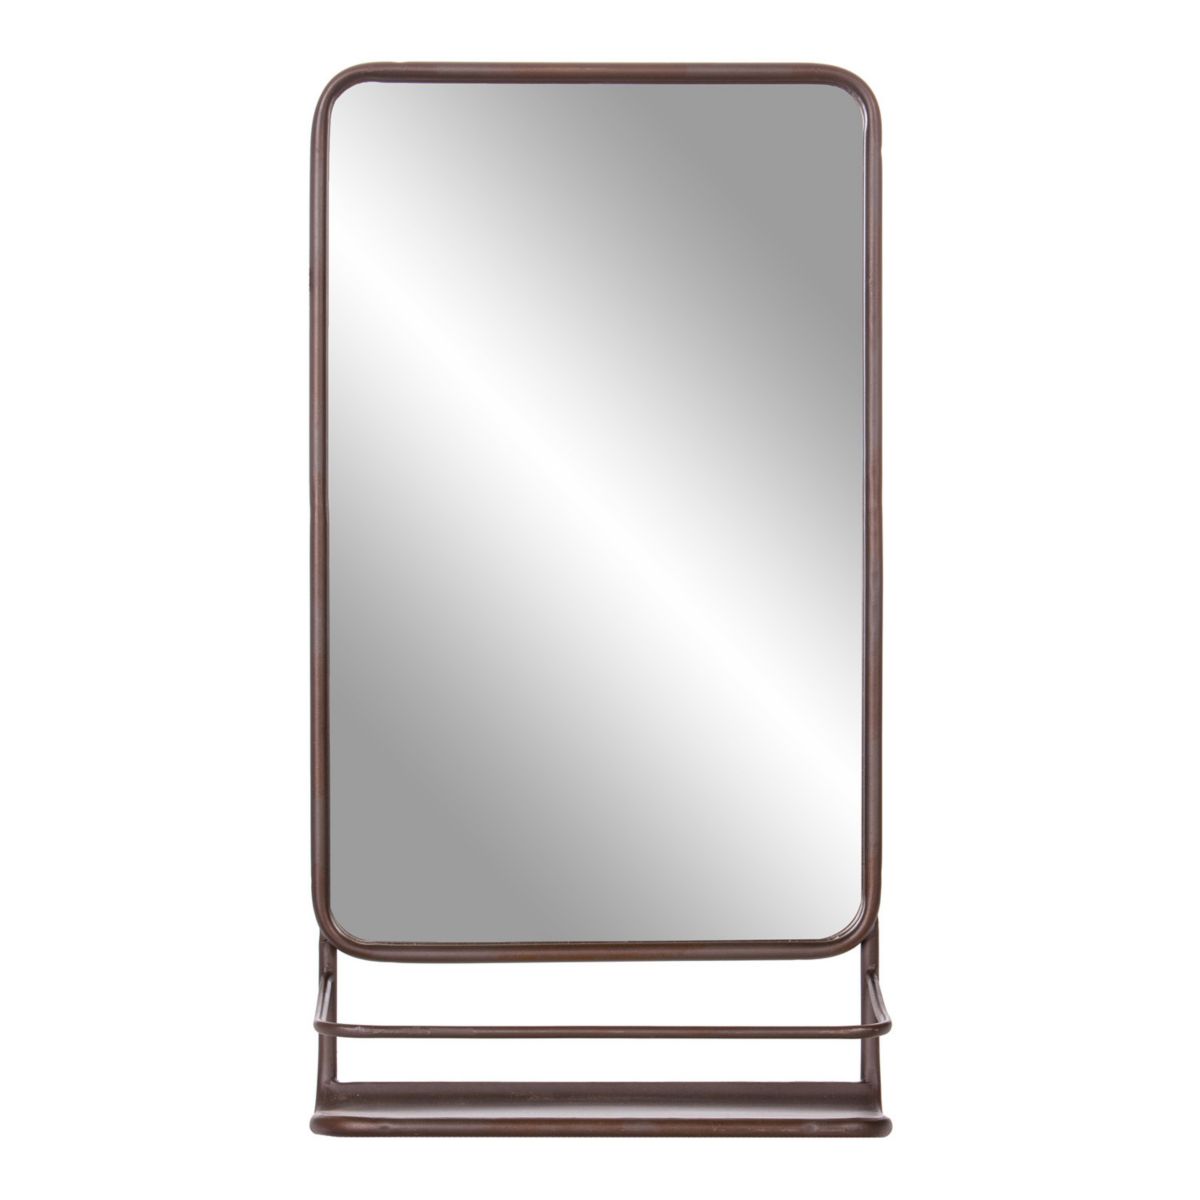 Зеркало на стол бронза. Зеркало ванная шкаф бронза. Metal Mirror. Зеркало MGO 16004. Купить зеркало акцент